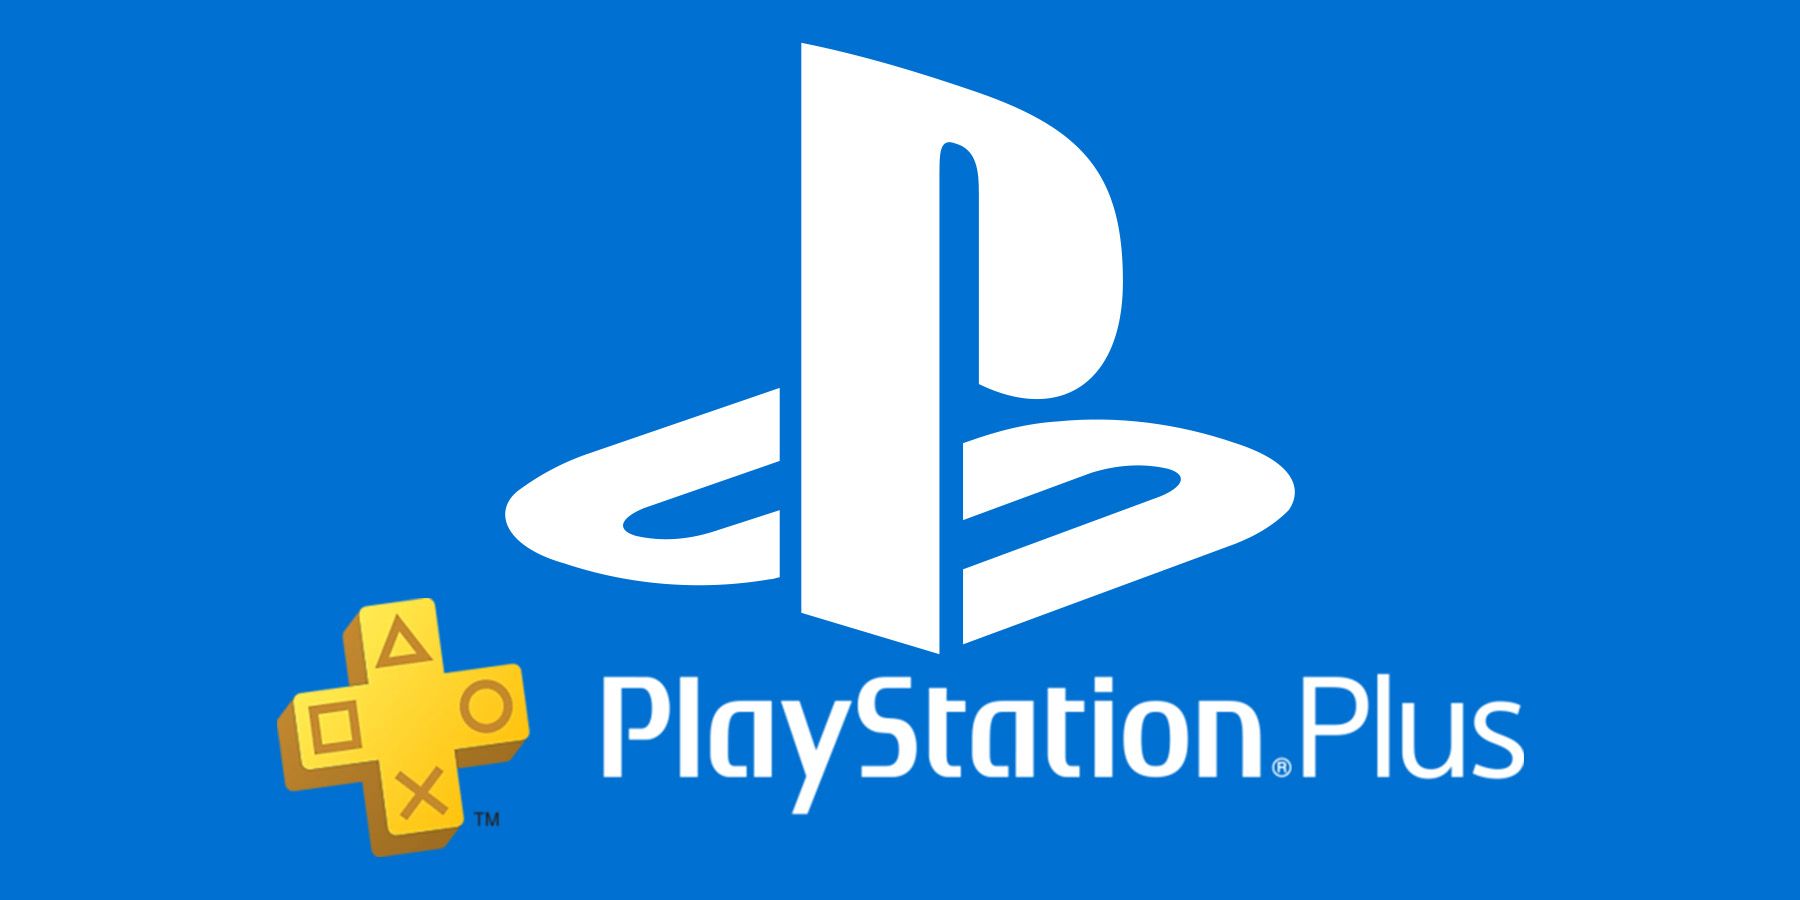 PS Plus logo below PlayStation logo submark on blue background